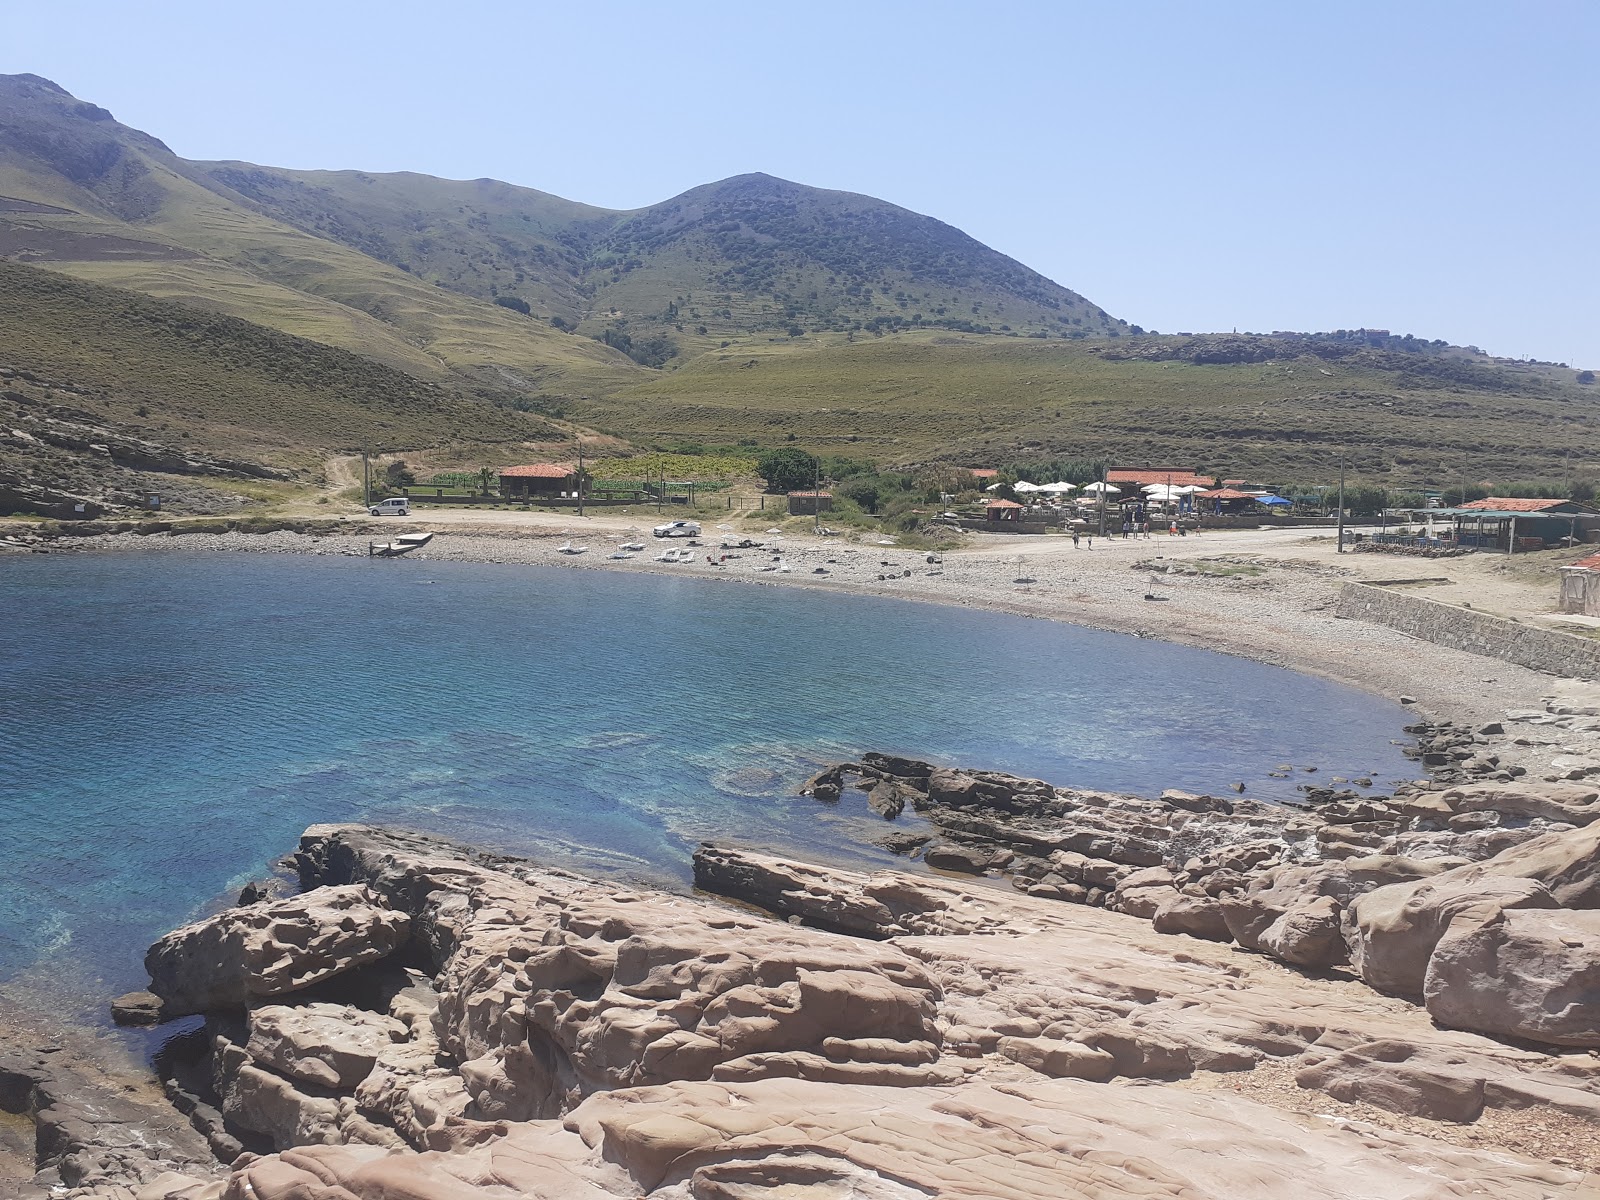 Foto di Yildiz Koyu beach e l'insediamento